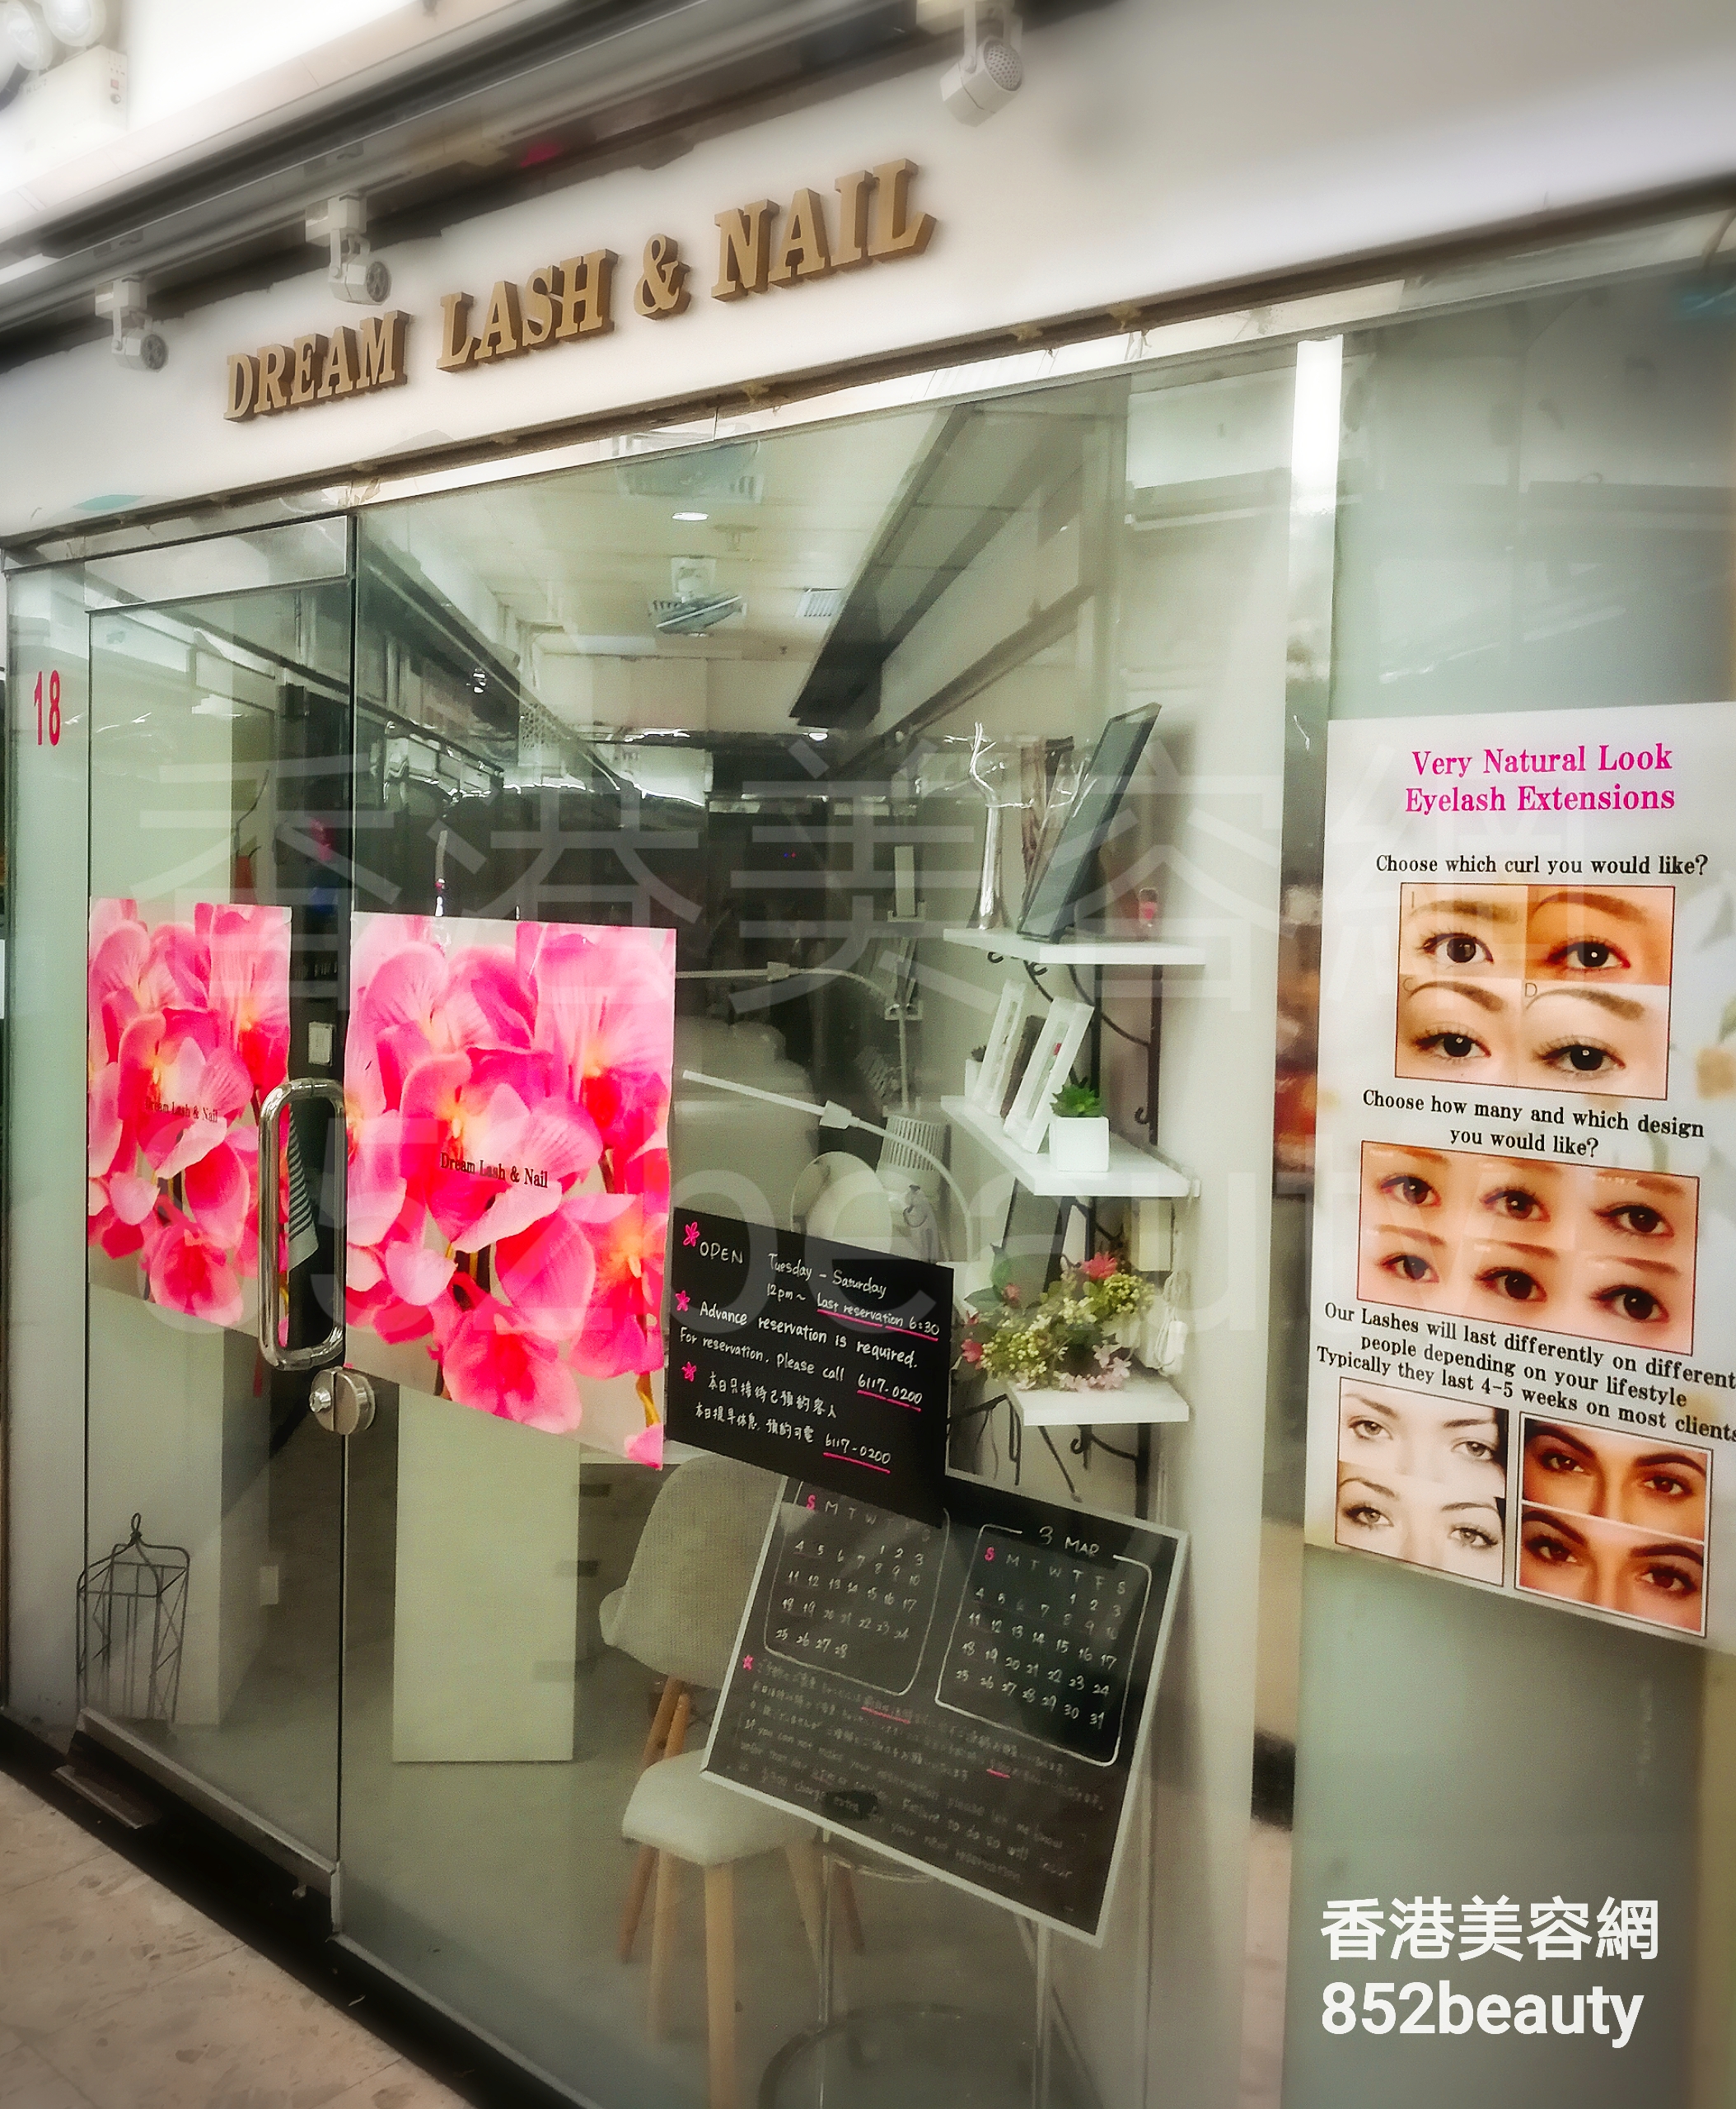 香港美容網 Hong Kong Beauty Salon 美容院 / 美容師: DREAM LASH & NAIL